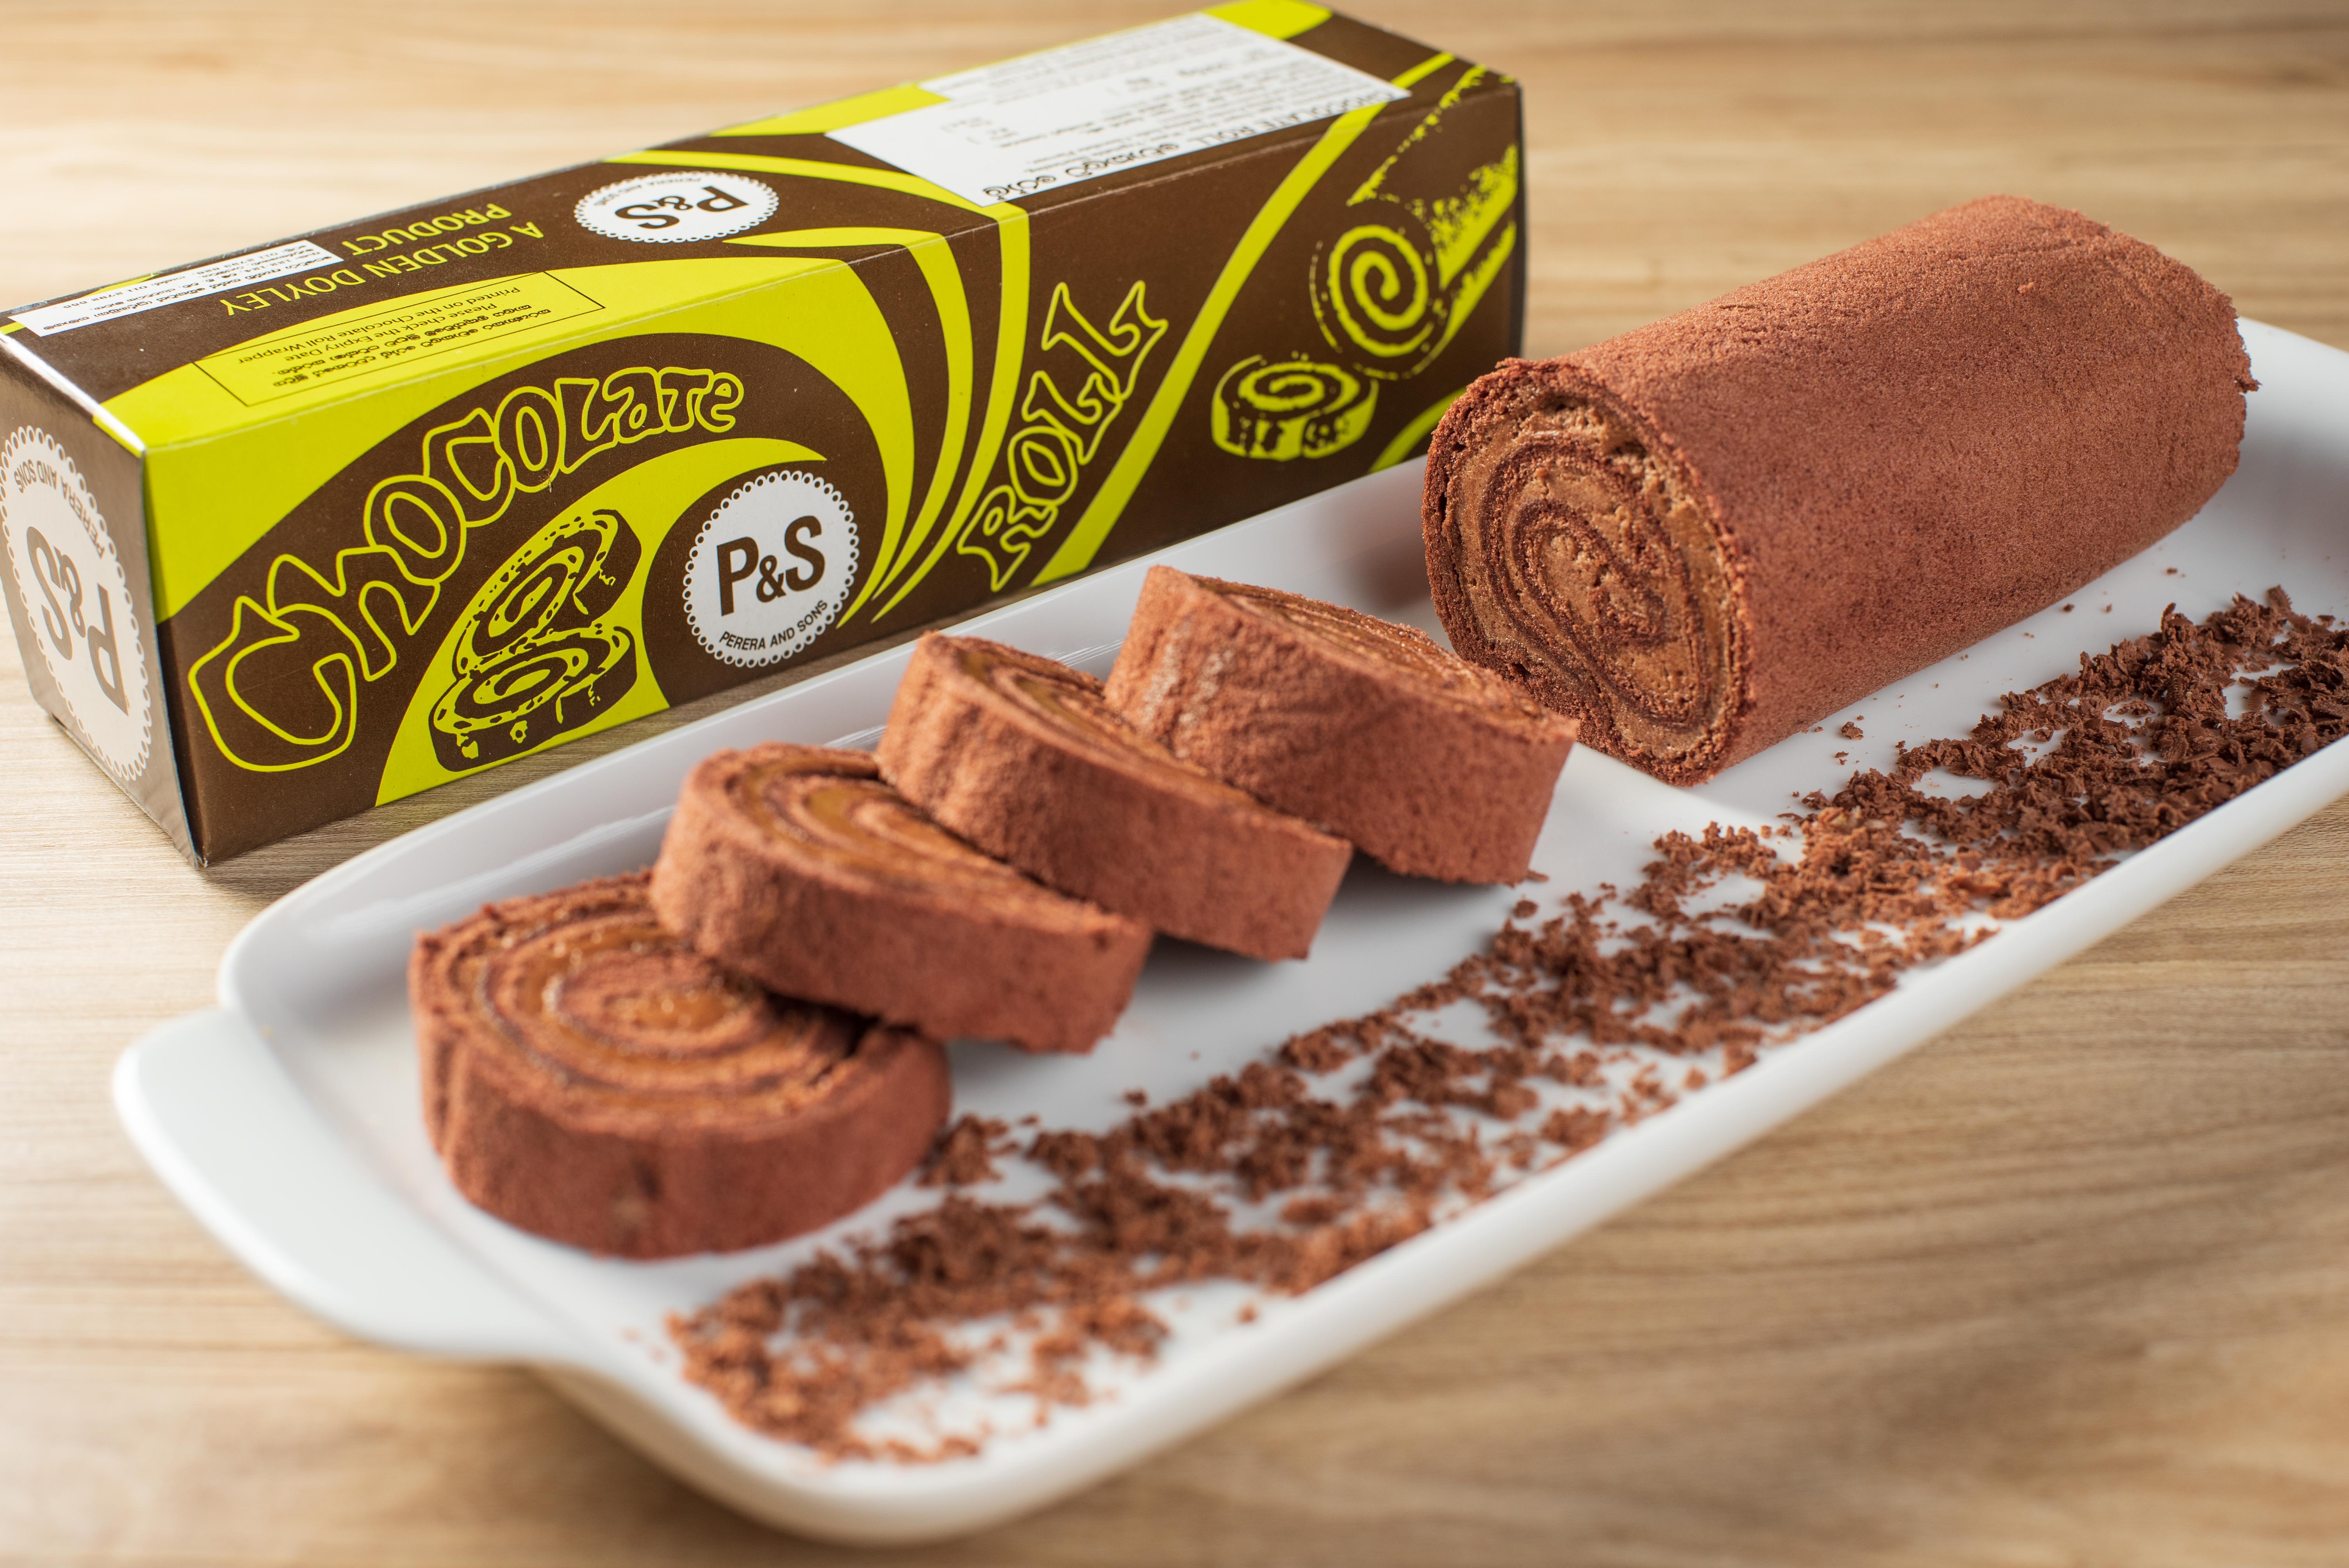 Perera & Sons / P&S Chocolate Roll 325g – LakFood